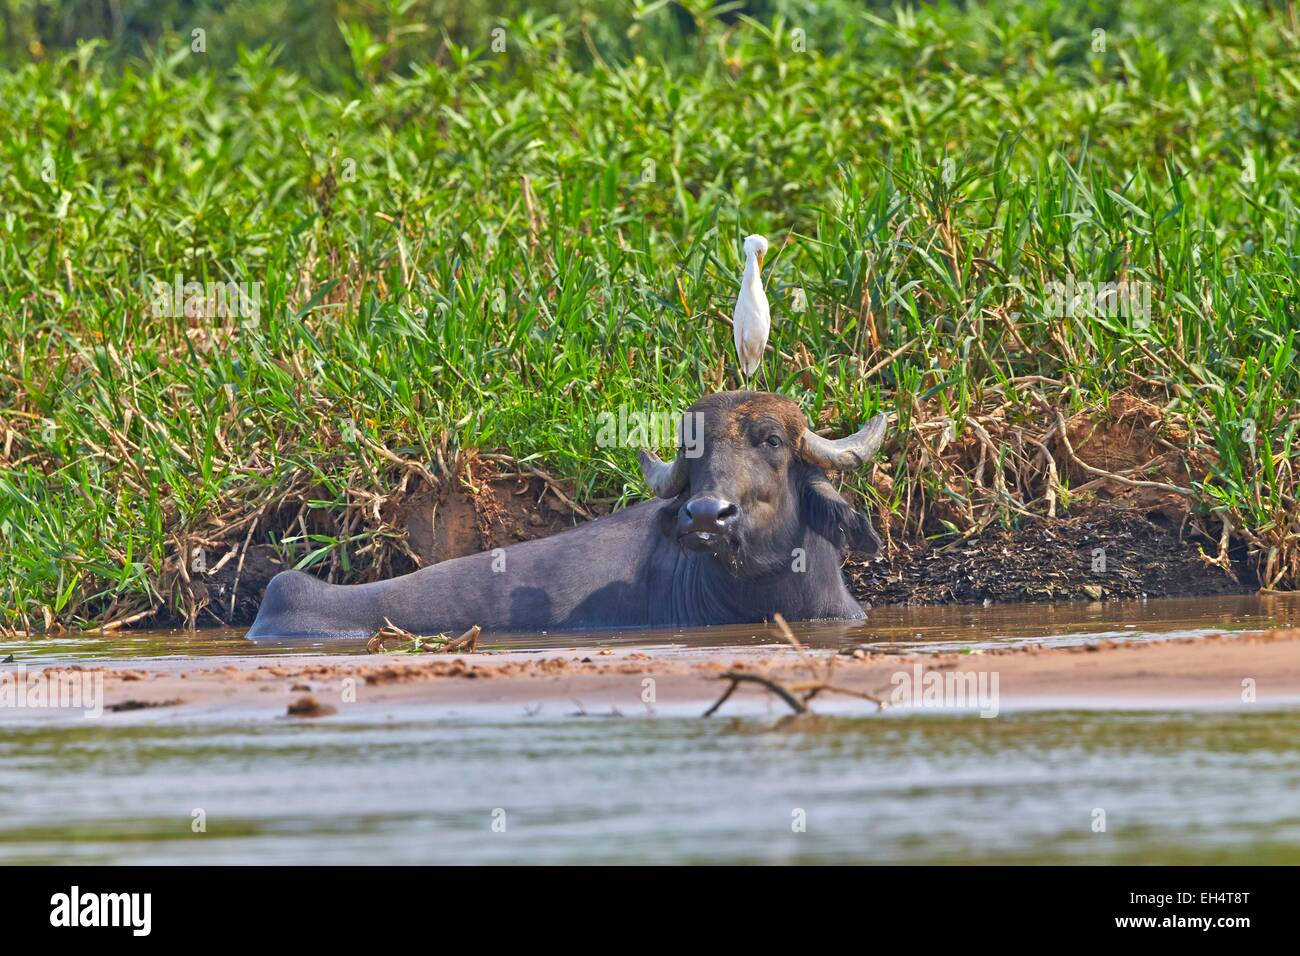 Brazil, Mato Grosso, Pantanal region, Water buffalo or Domestic Asian water buffalo (Bubalus bubalis) with a Cattle egret (Bubulcus ibis) on the back Stock Photo